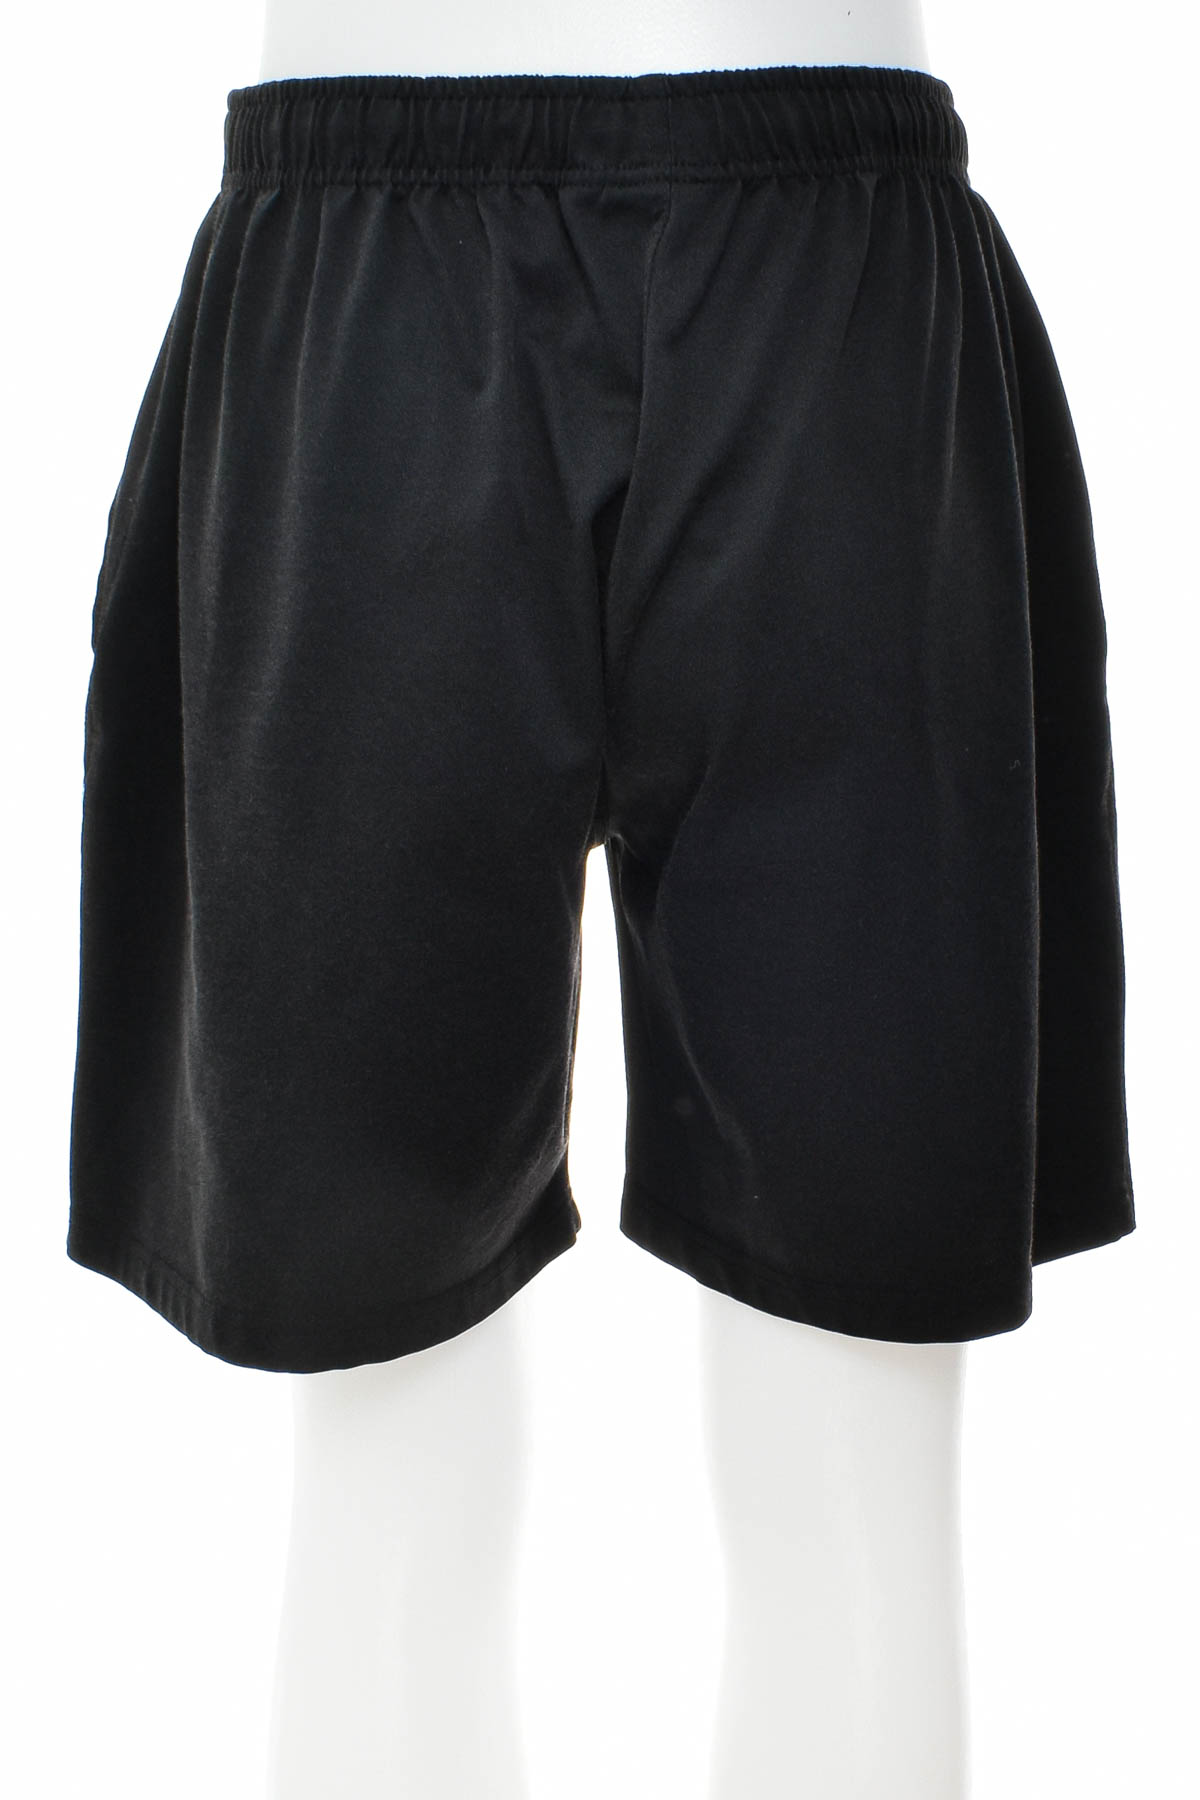 Men's shorts - CRANE SPORTS - 1